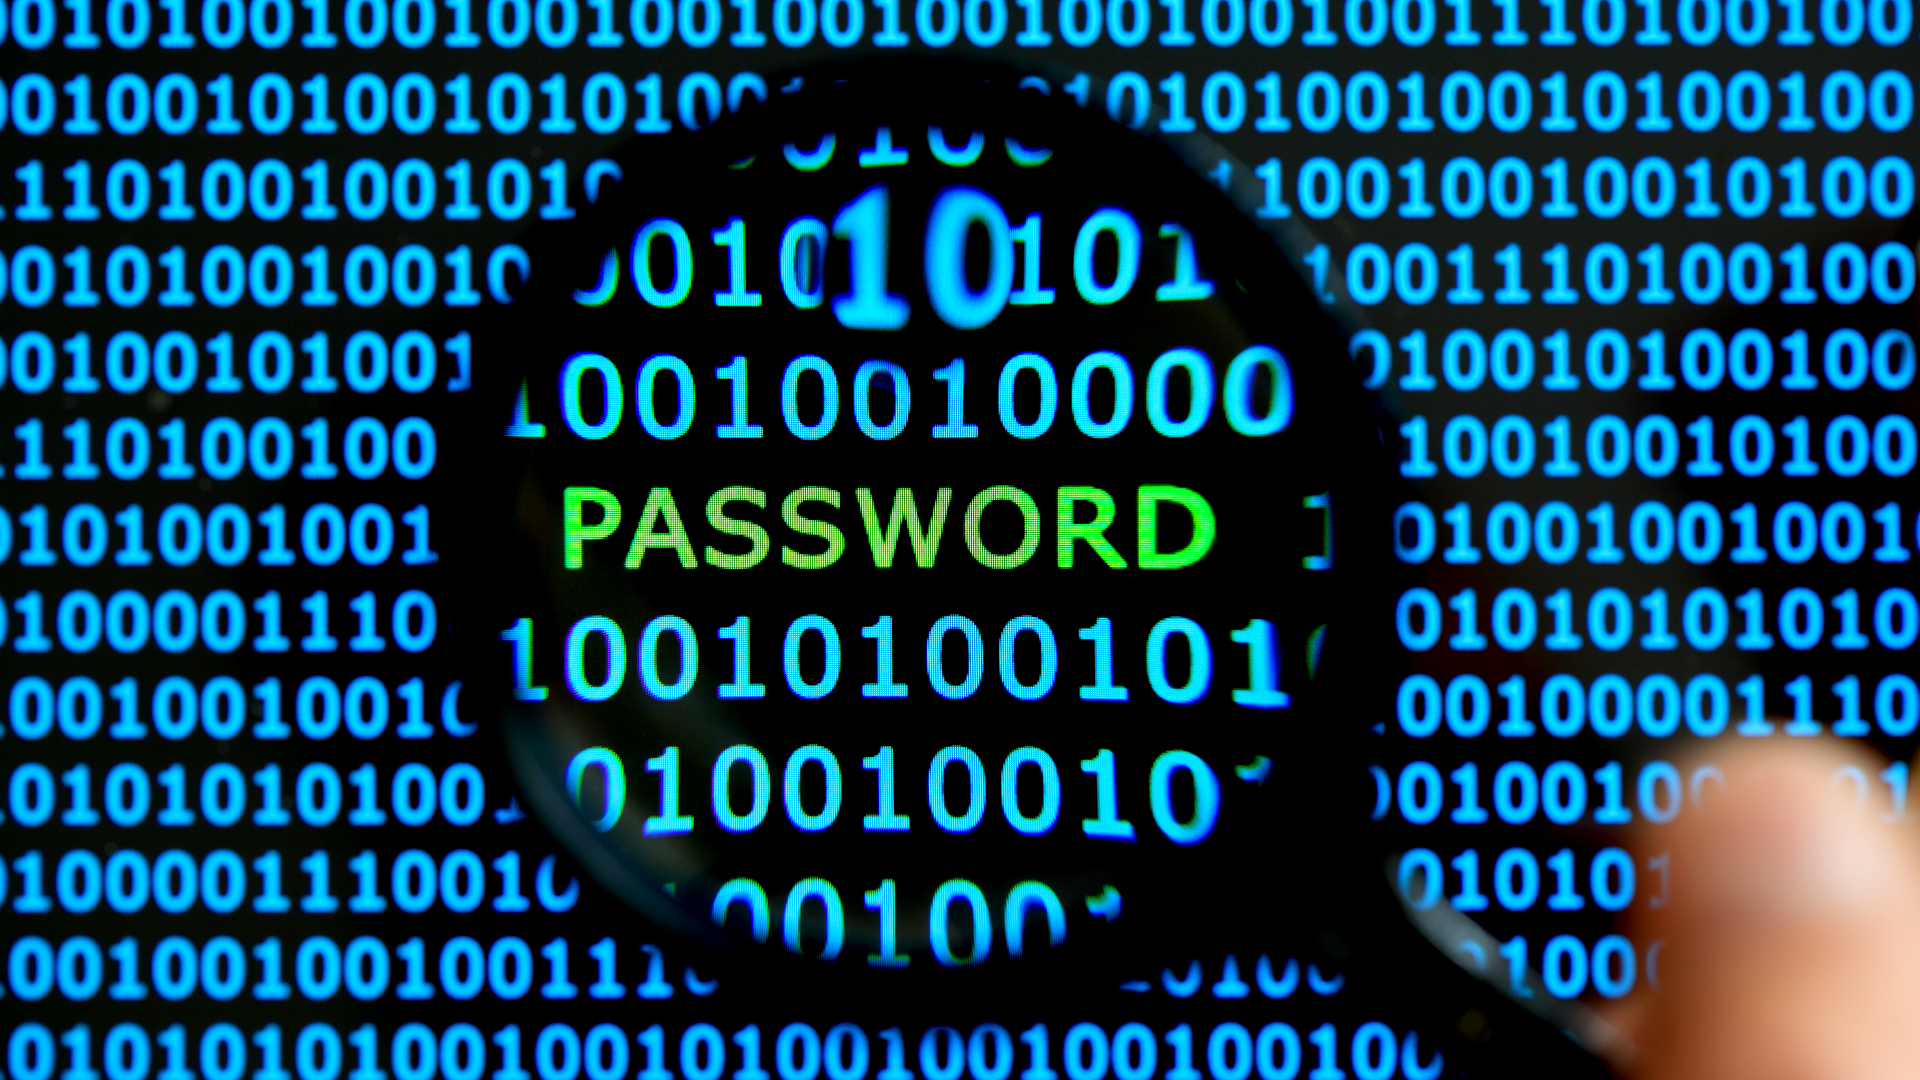 leaked password database